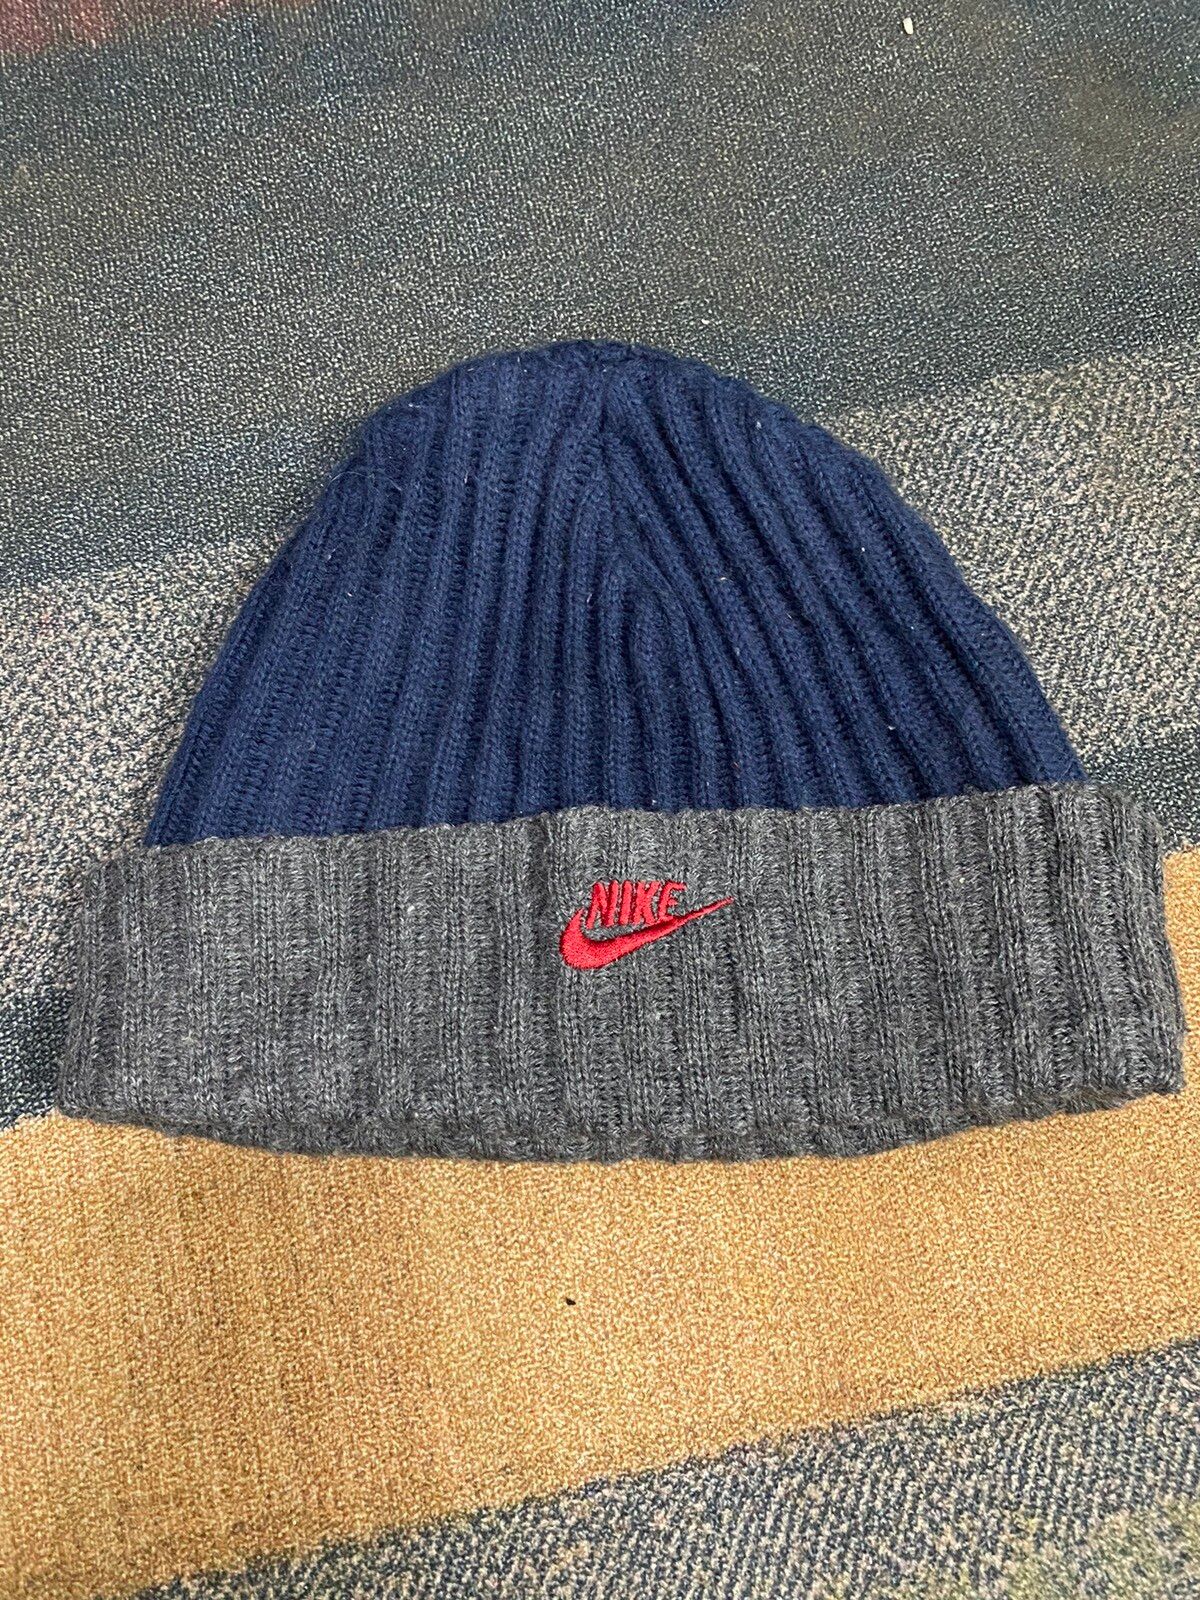 Vintage Nike Swoosh Hat - 10